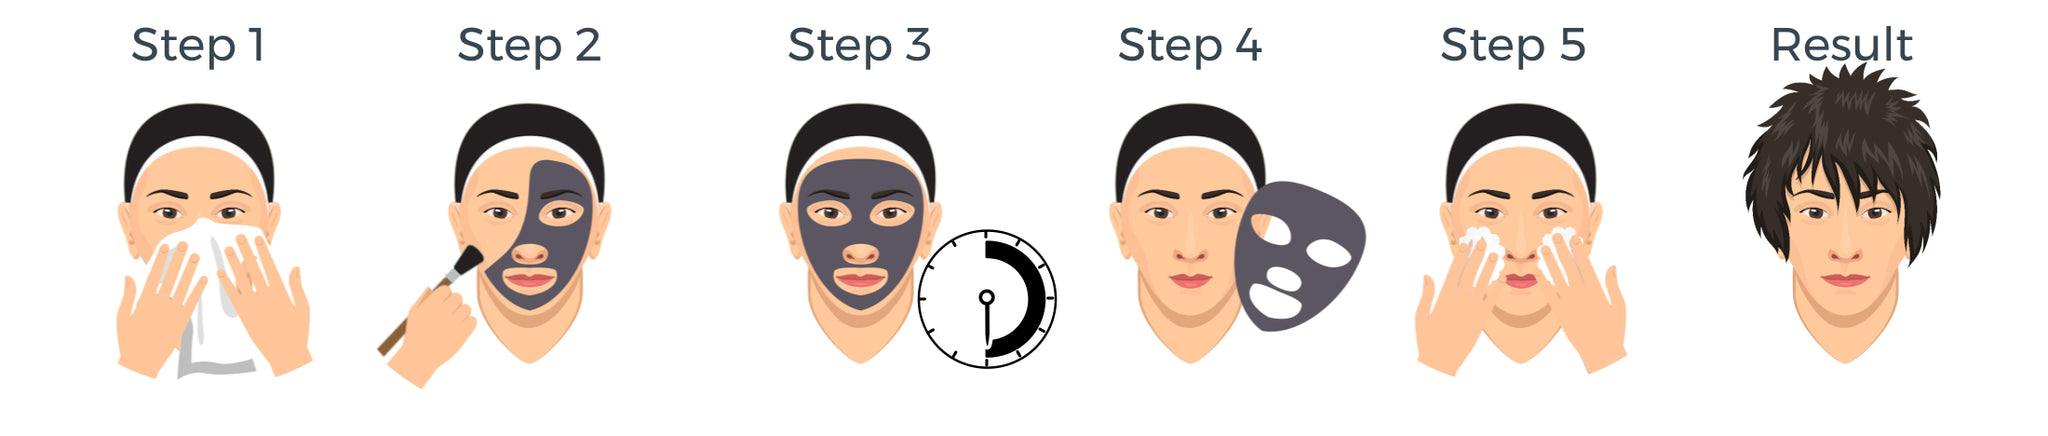 Certified Organic Skincare,Exfoliate Clay Mask,Facial Rejuvenation,Herbal,Natural skincare,Spa treatment,Anti aging,Face Mask For Men.peel off mask,Charcoal Mask.